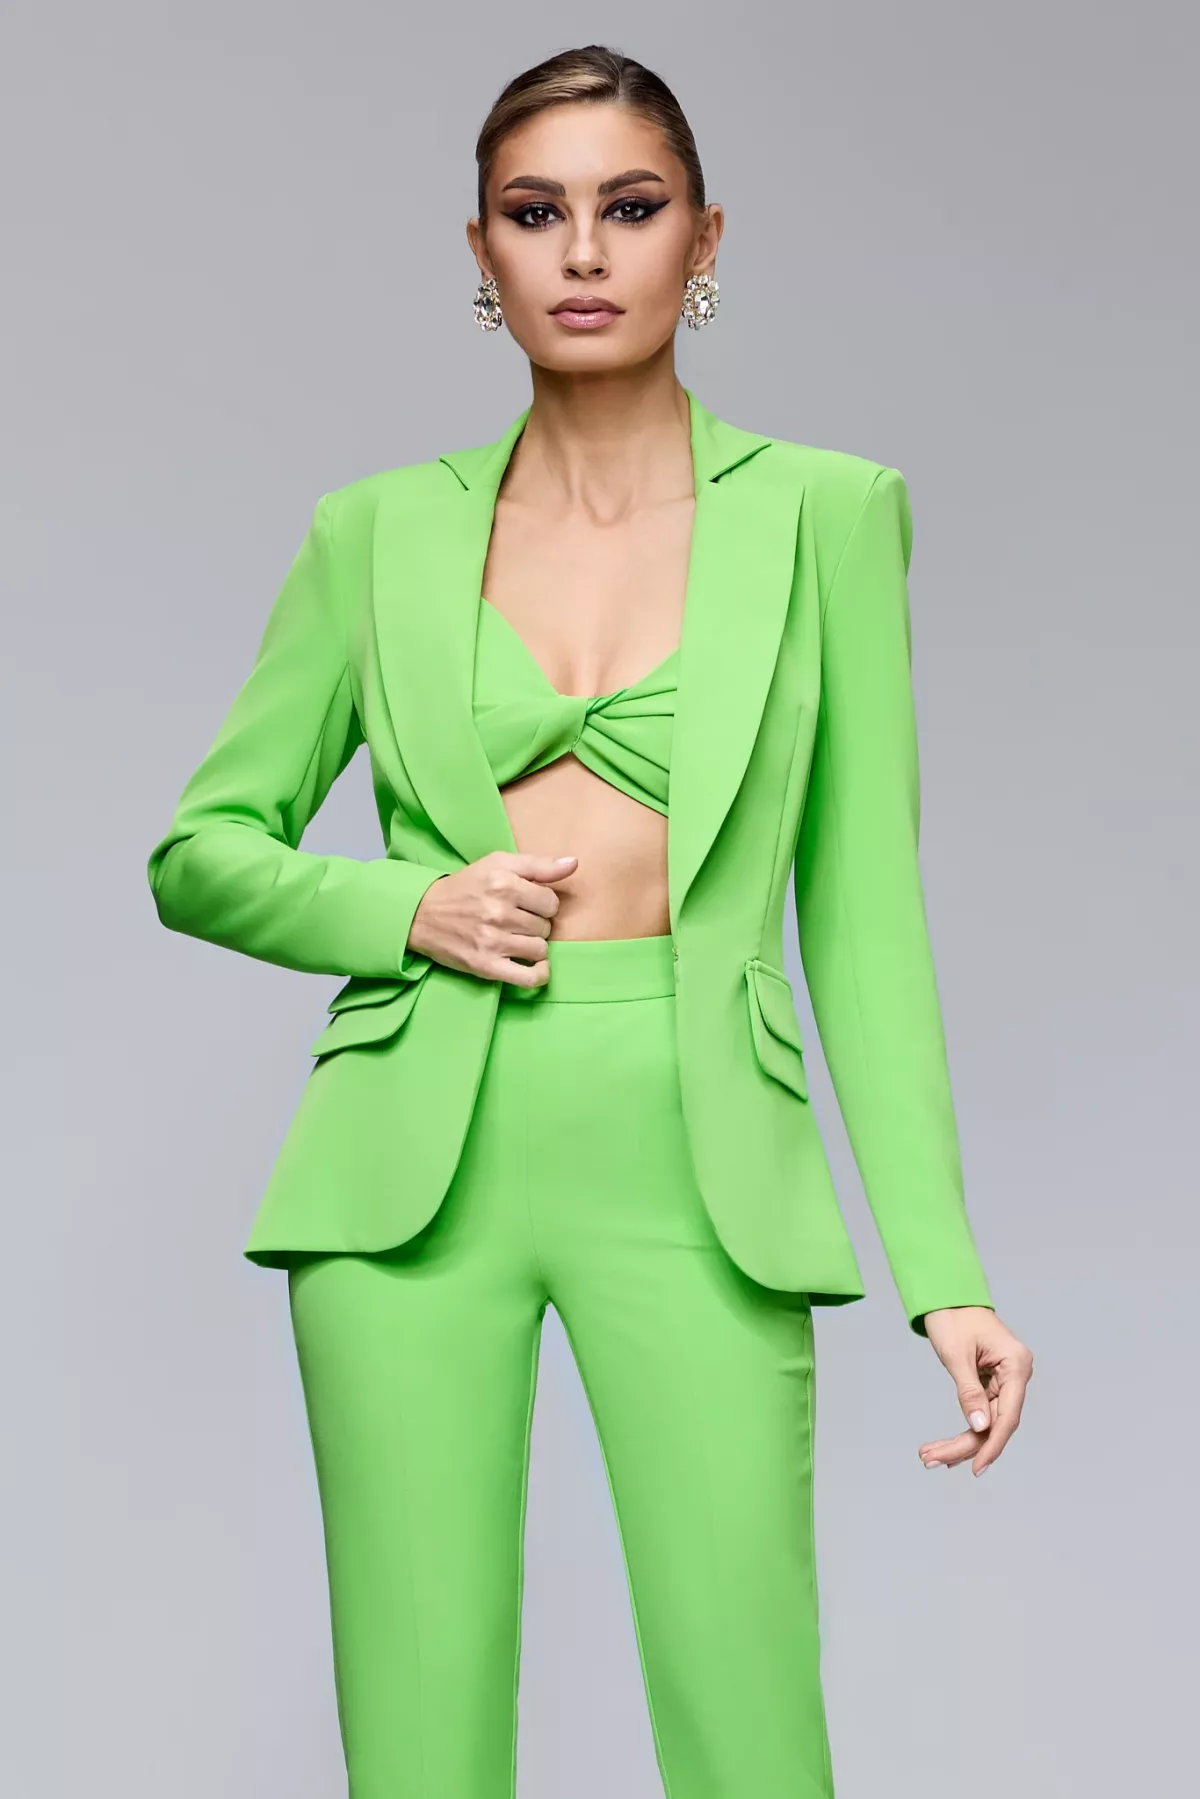 Compleu elegant verde, din 3 piese: sacou, bustiera si pantaloni cu talia inalta BBY 20345